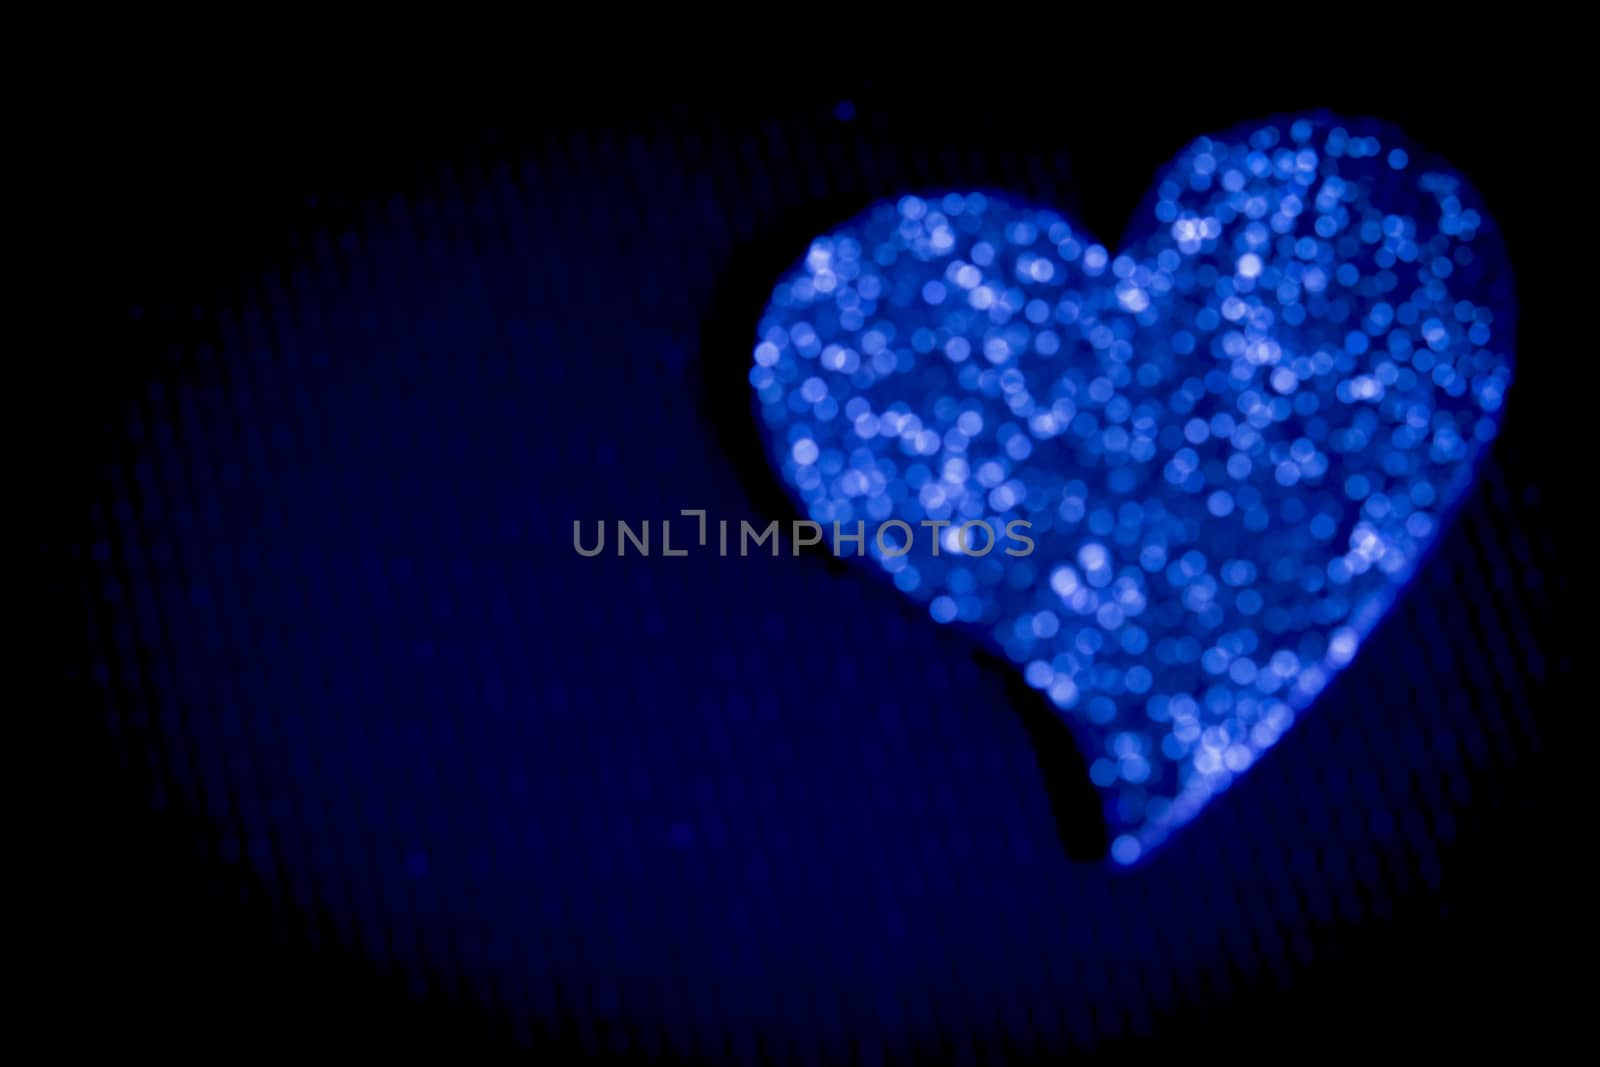 Defocused blue heart on black background.